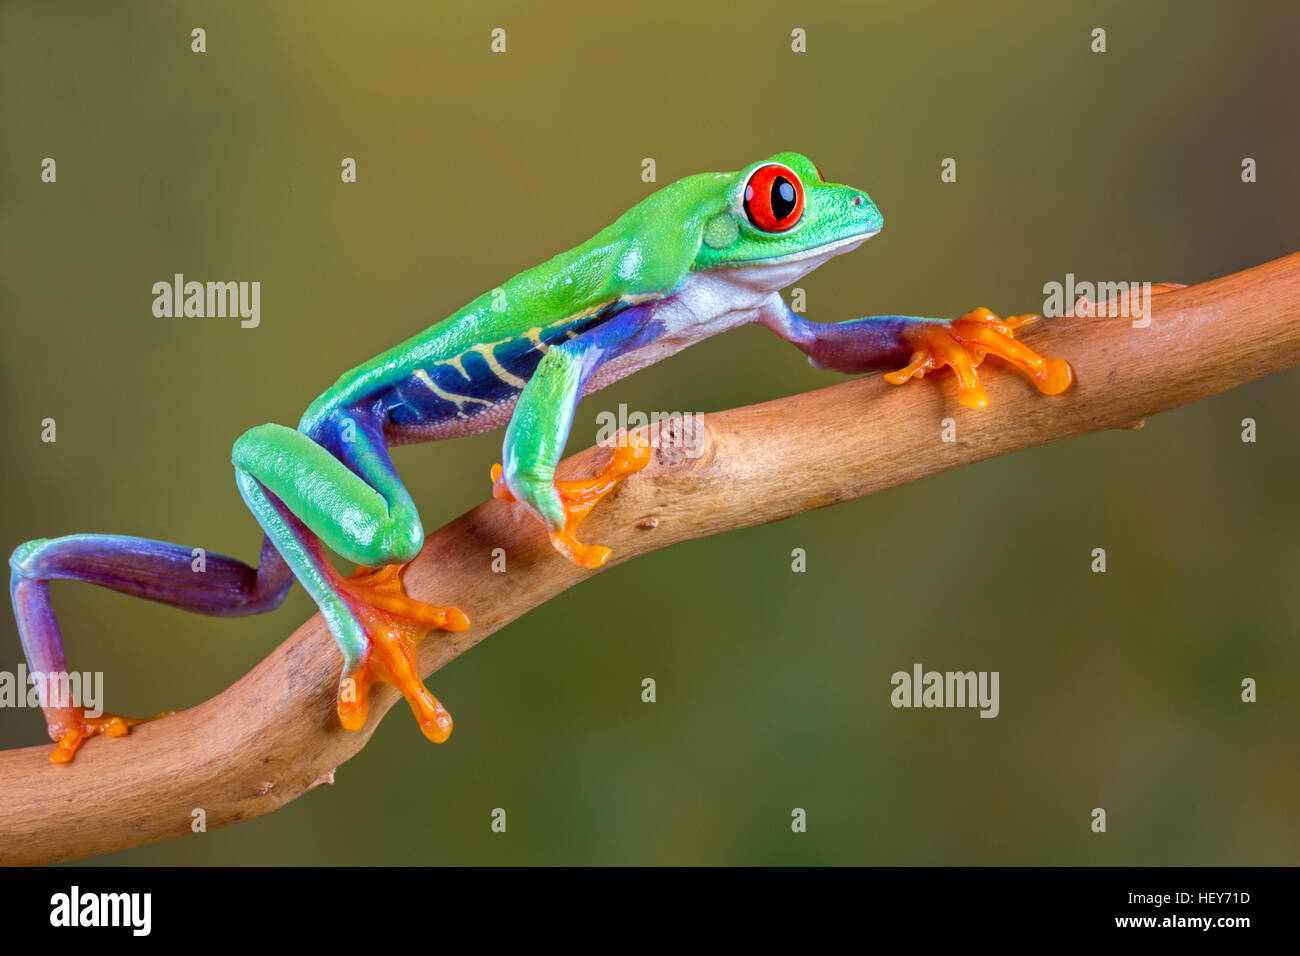 Red-eyed Tree Frog Foto de stock